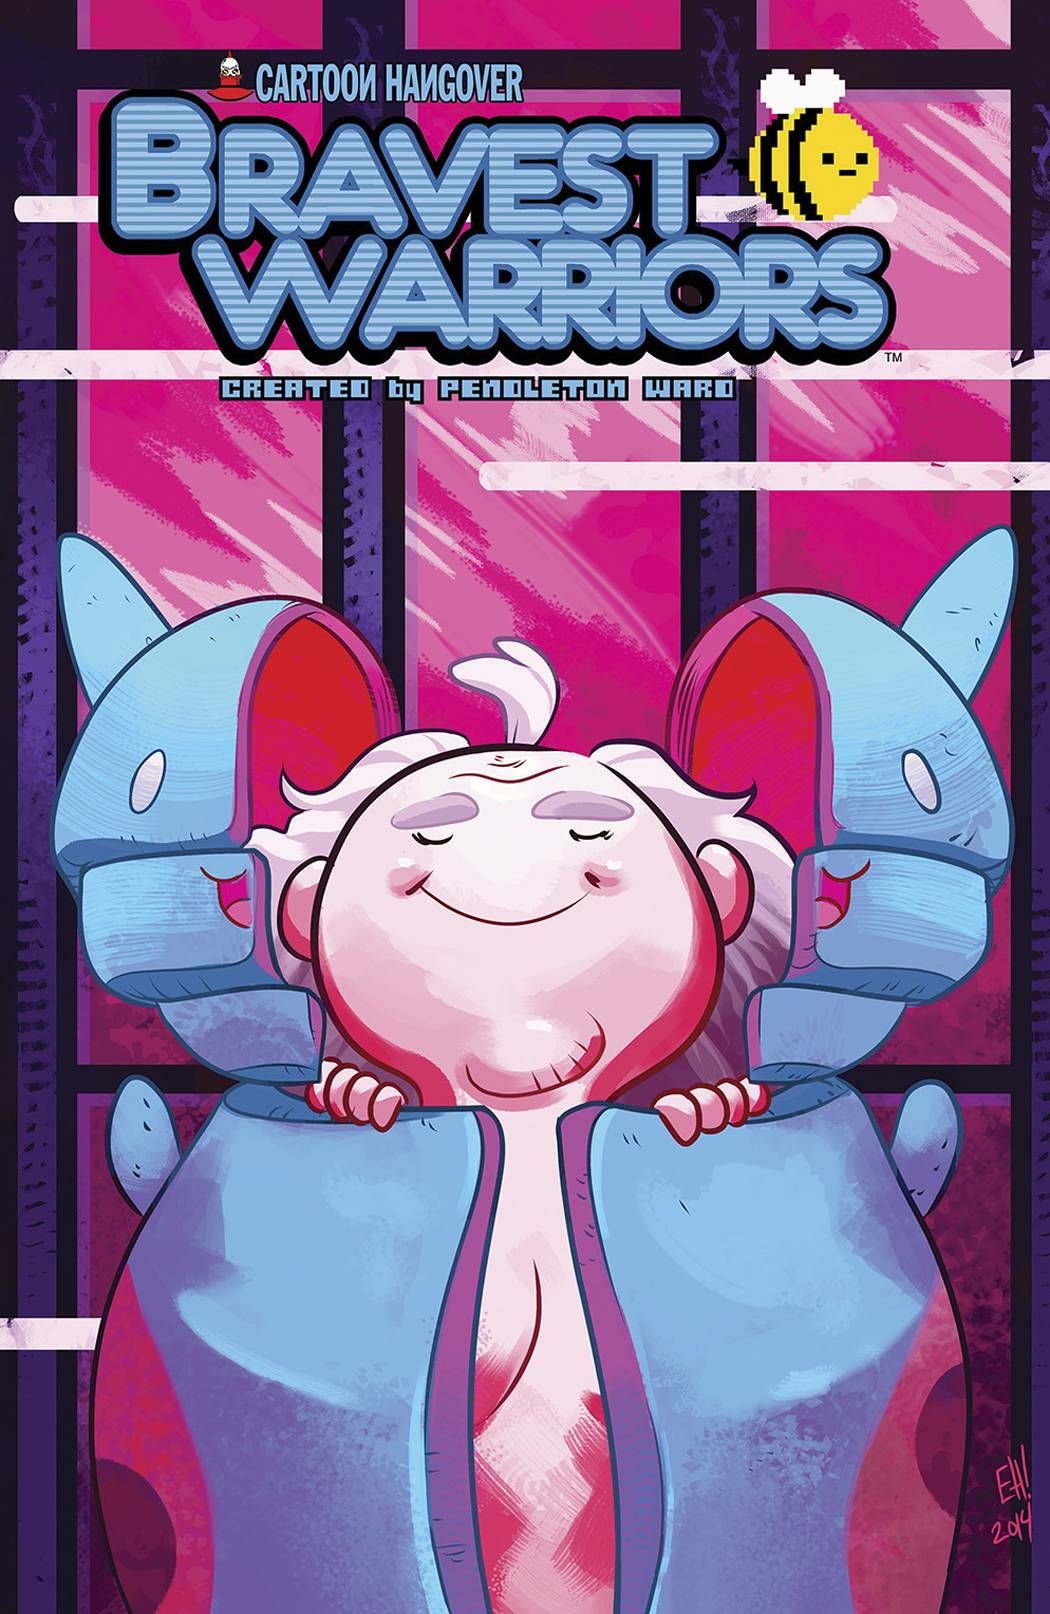 Bravest Warriors #25 Comic